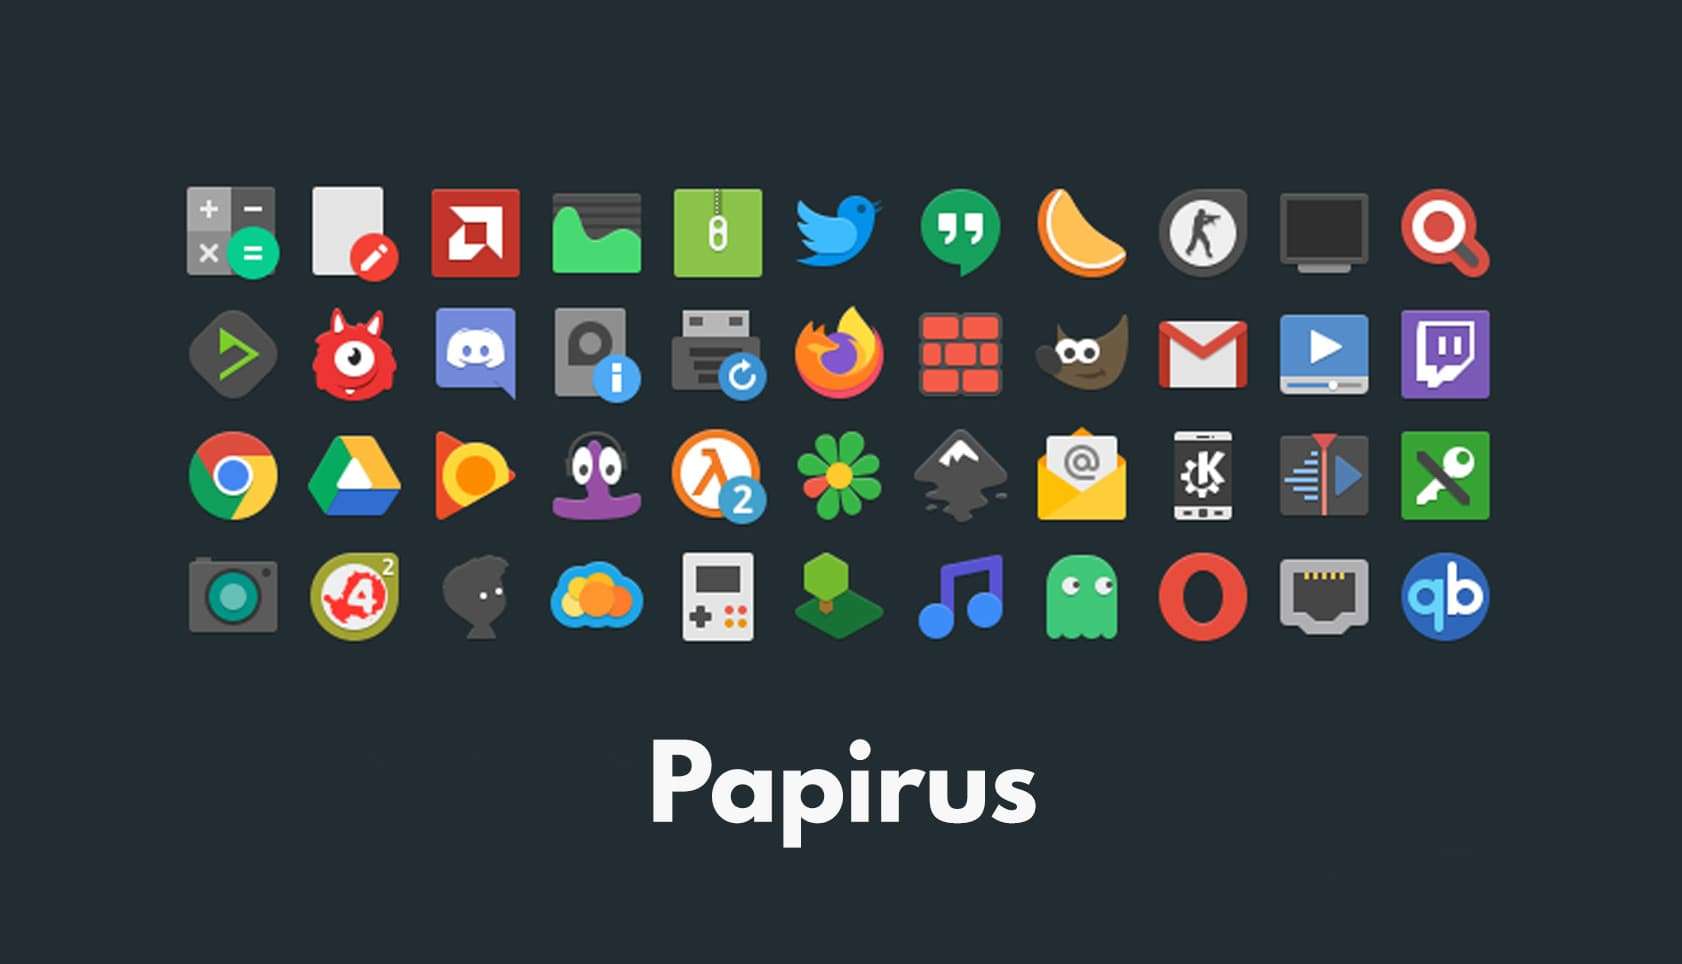 8 icon themes tốt nhất cho Ubuntu